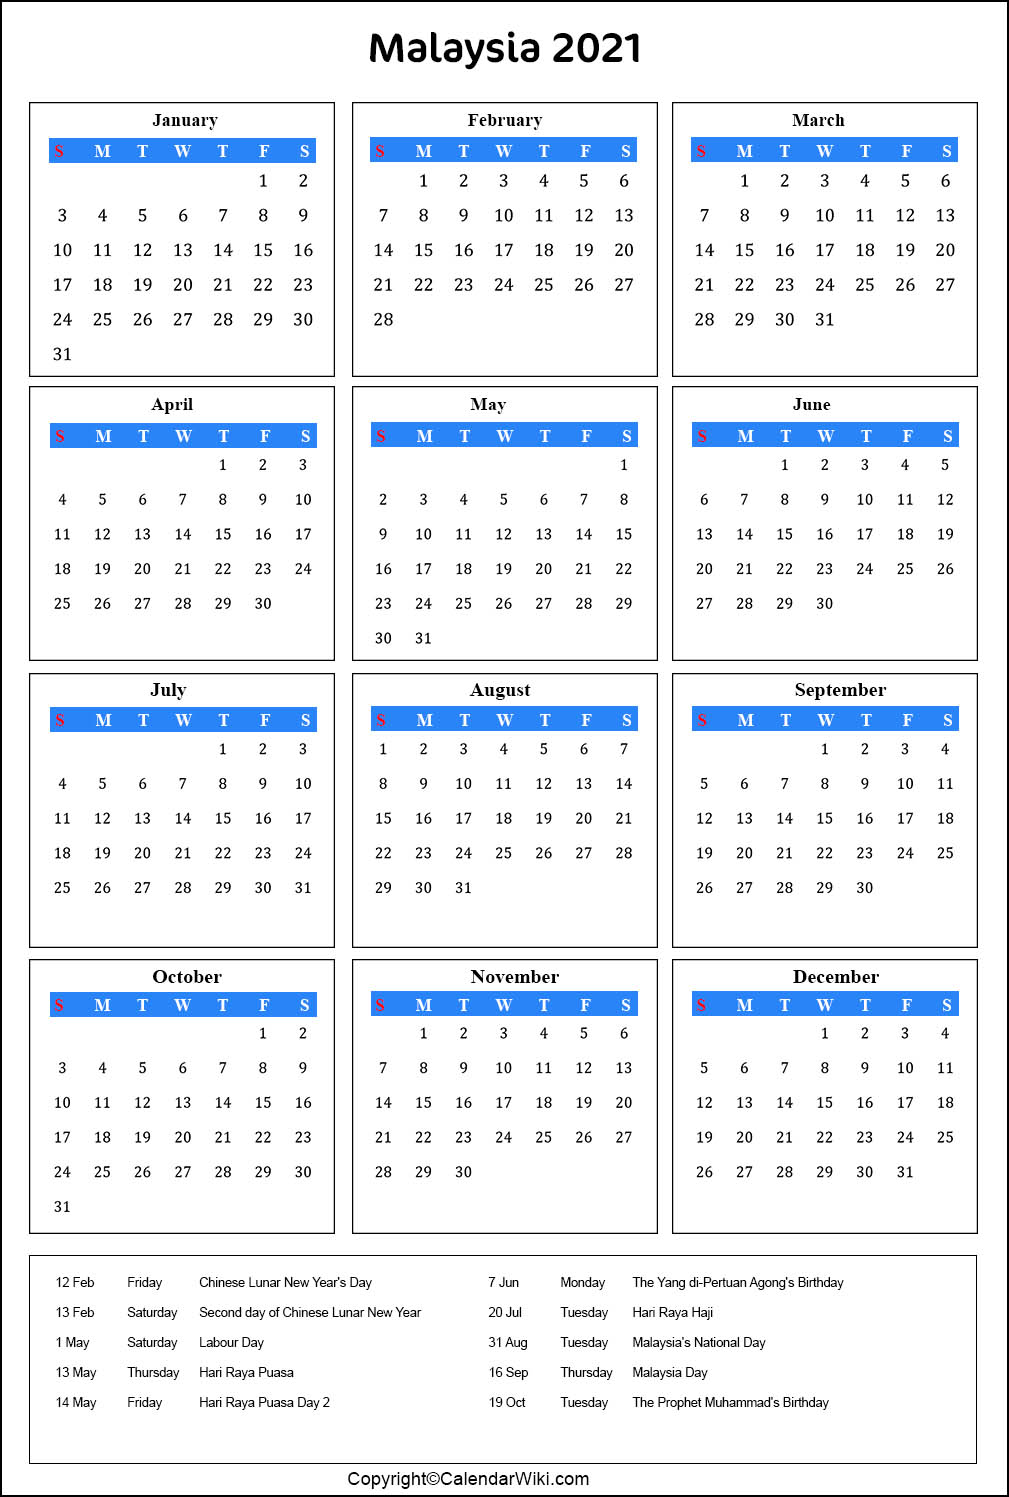 printable-malaysia-calendar-2021-with-holidays-public-holidays